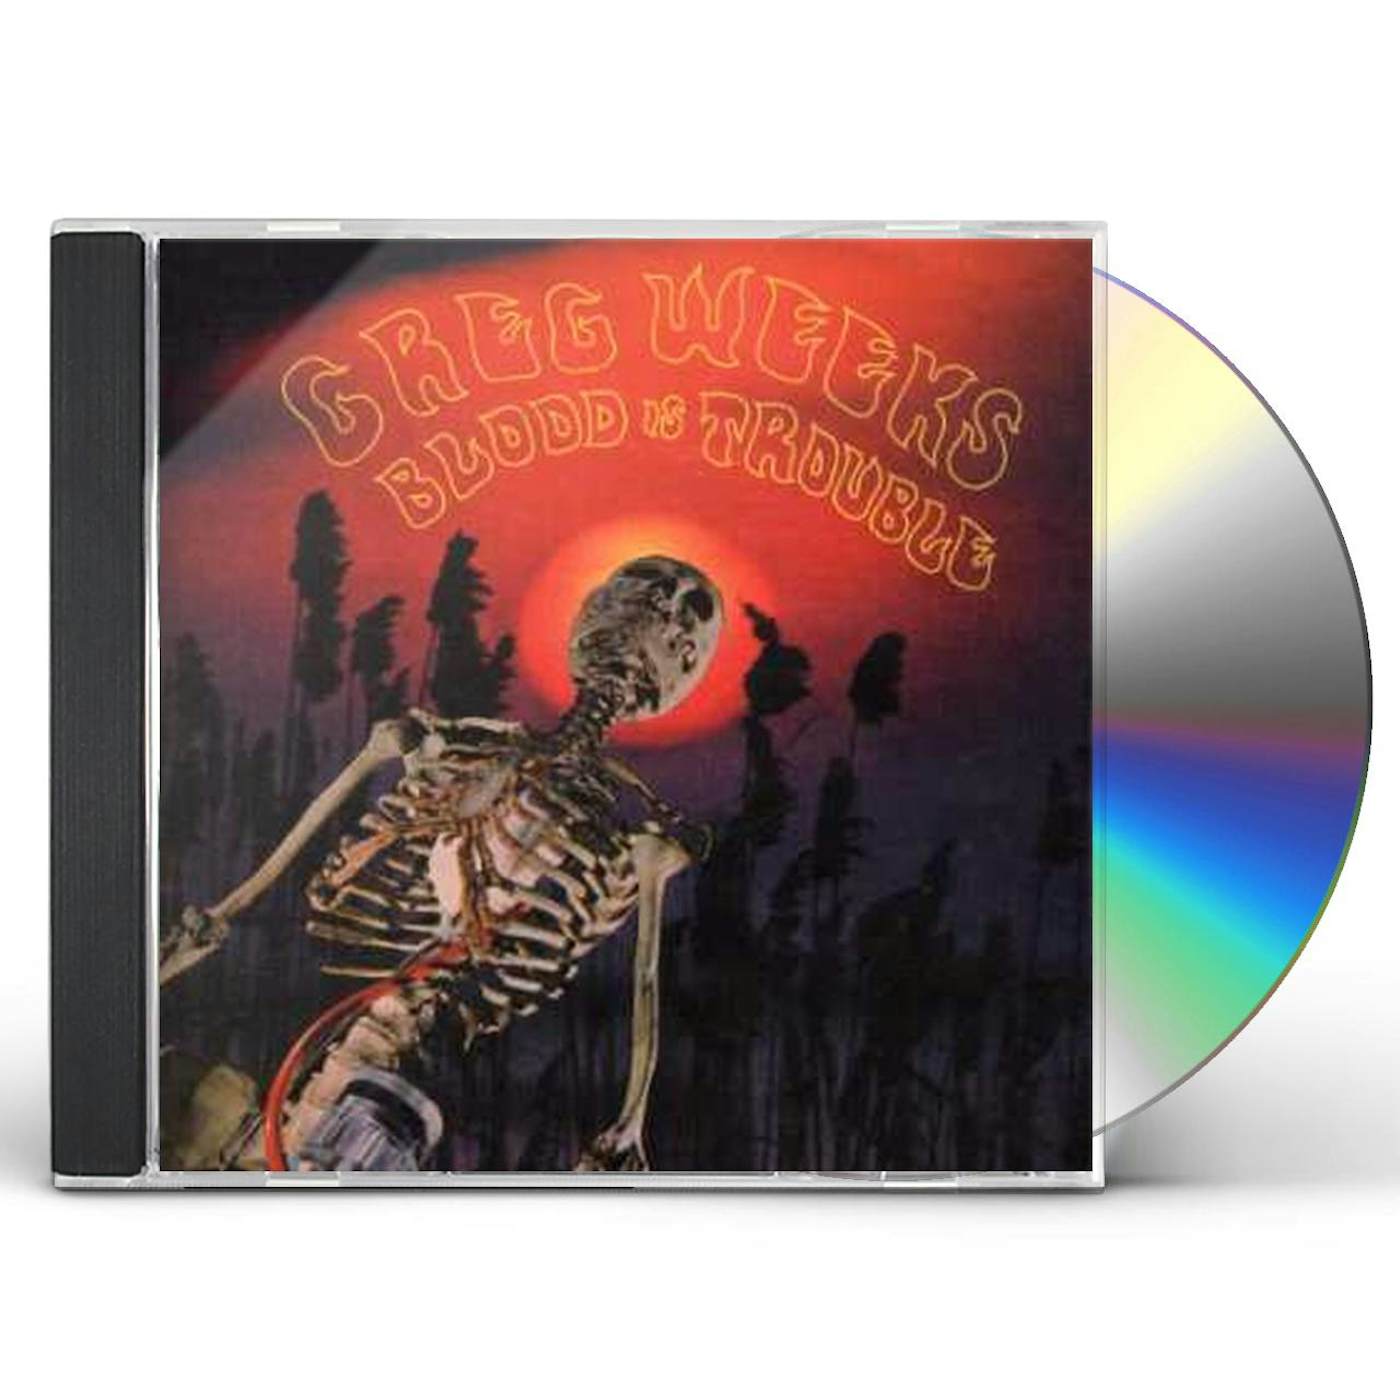 Greg Weeks BLOOD IS TROUBLE CD